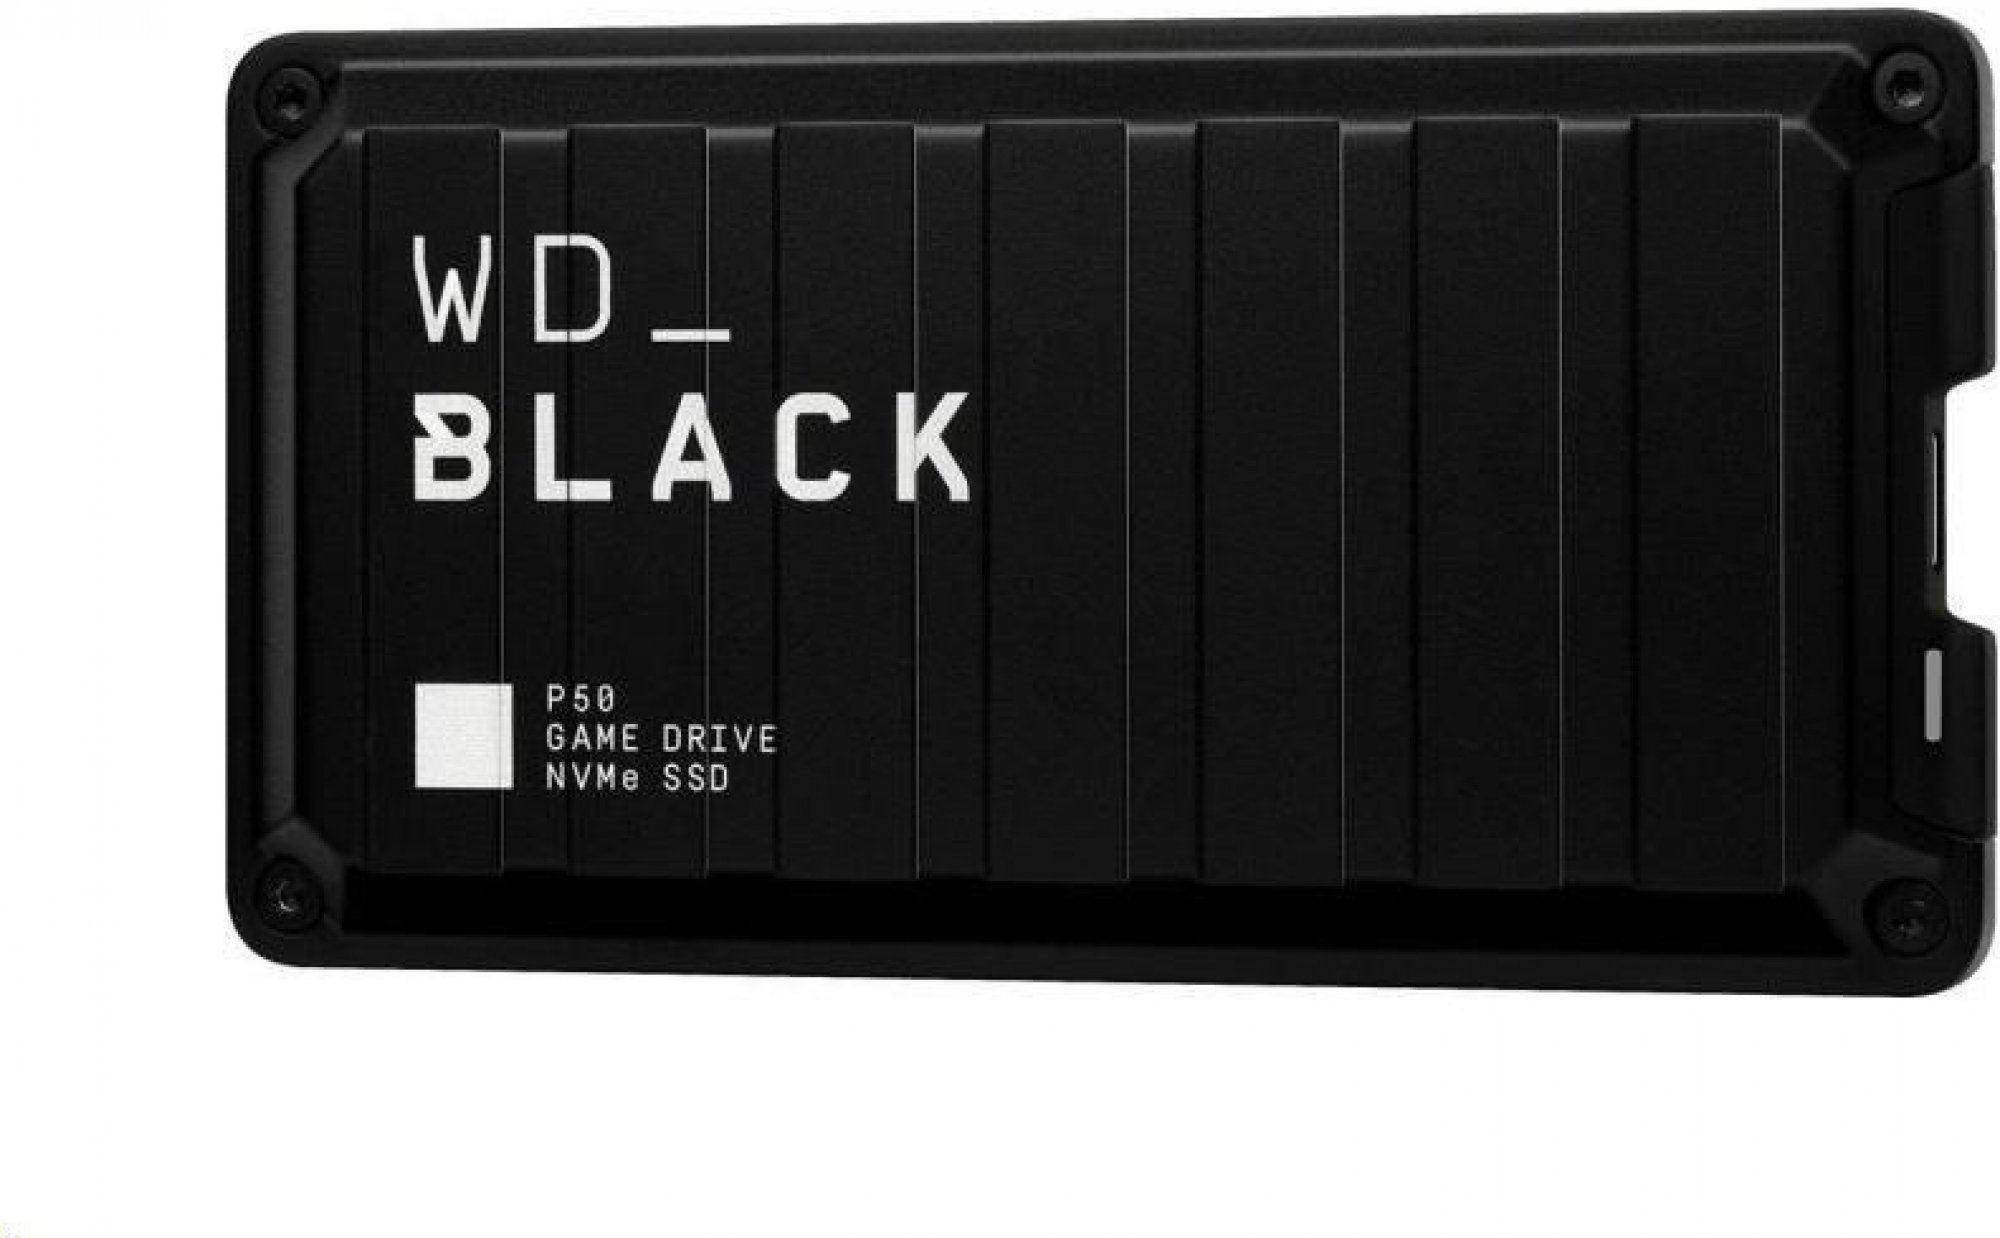 WD_Black P50 Game Drive SSD 500GB 